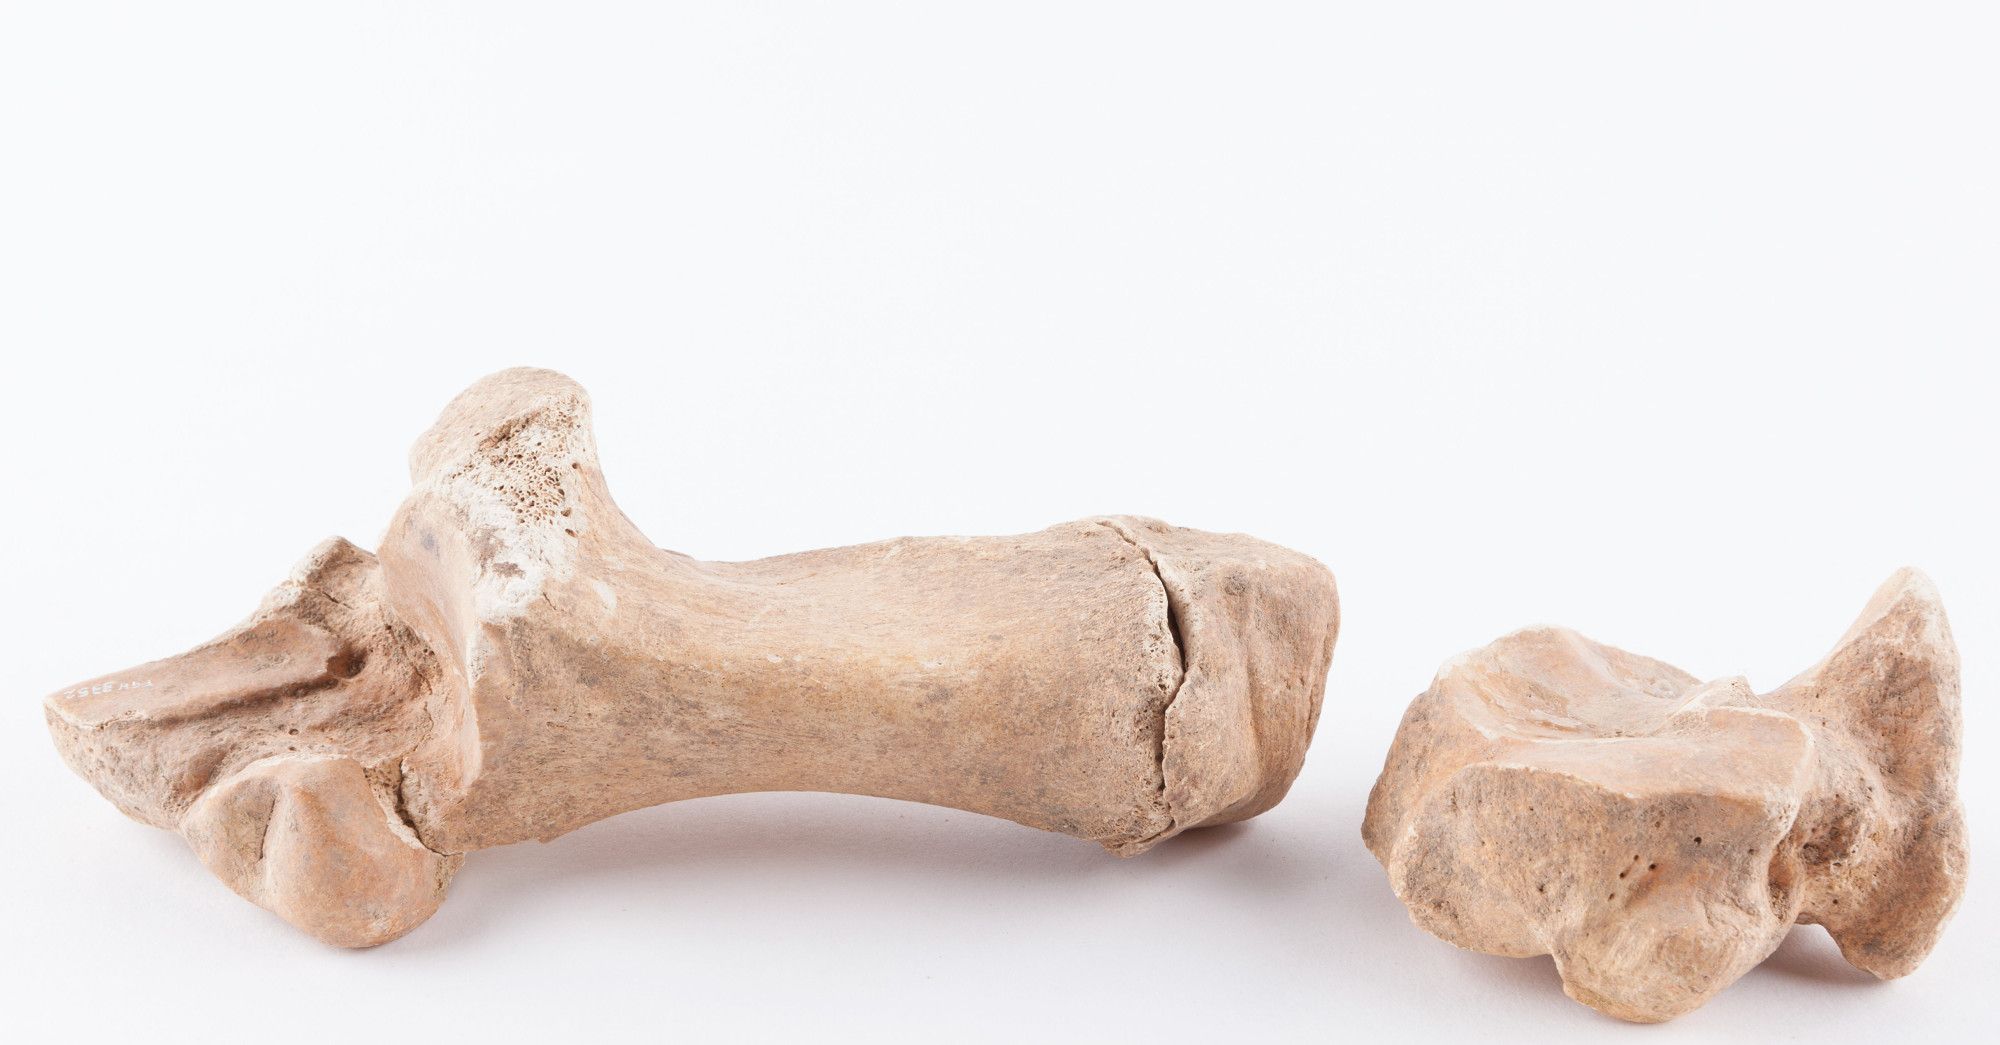 Lower leg bones from a cow